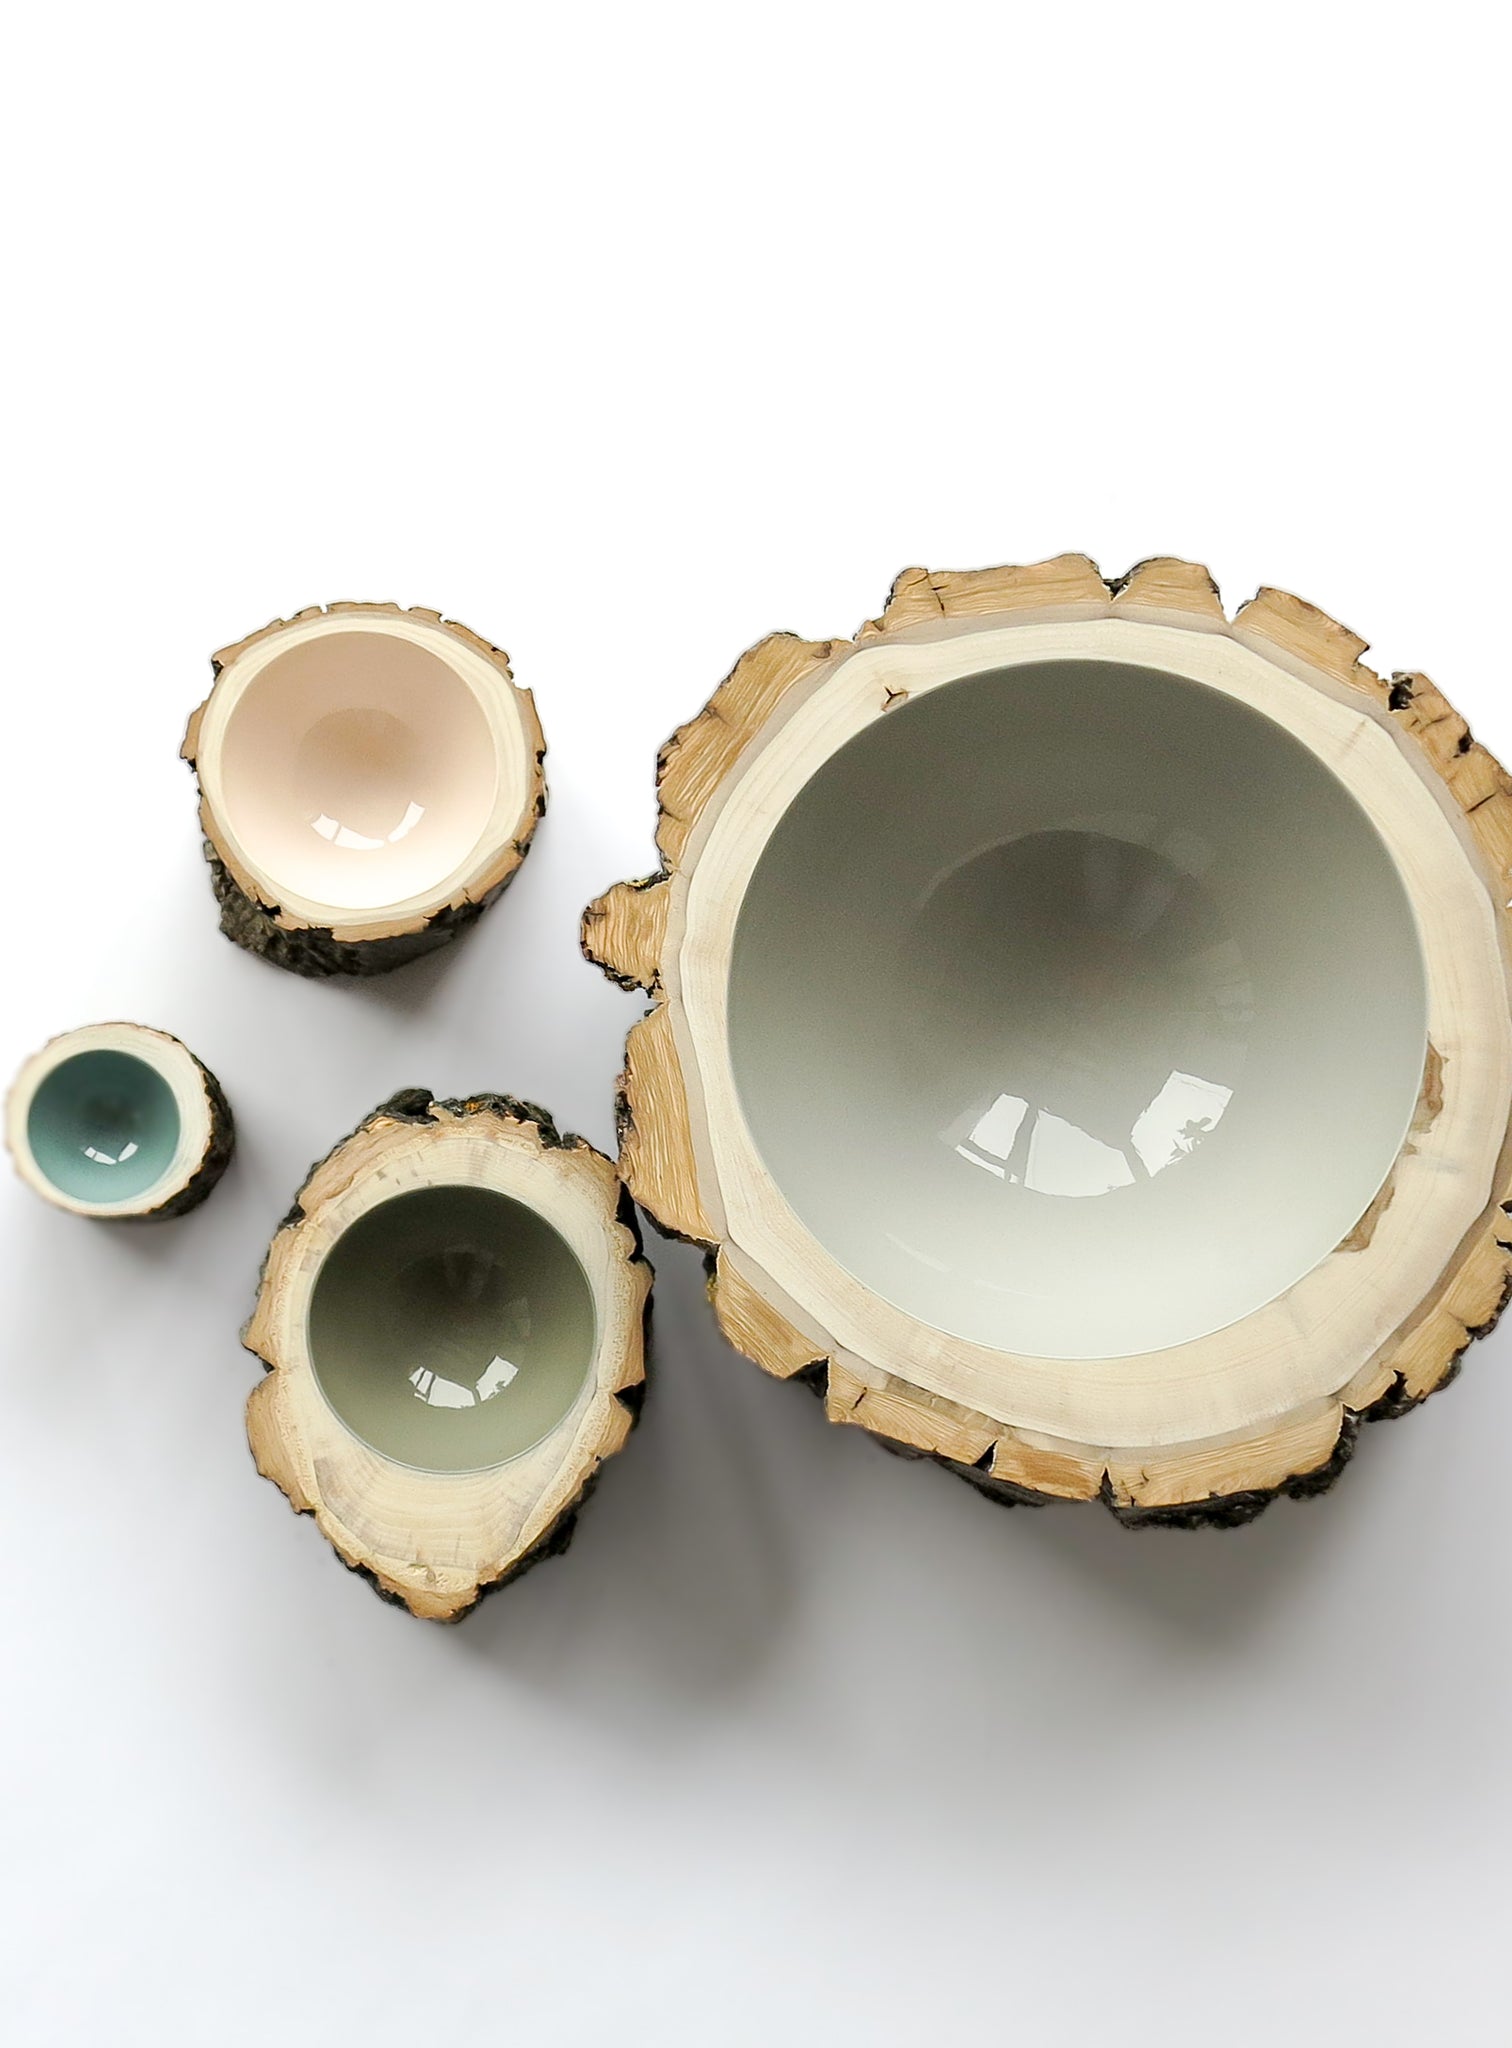 Log Bowl | Size 3 | Clay